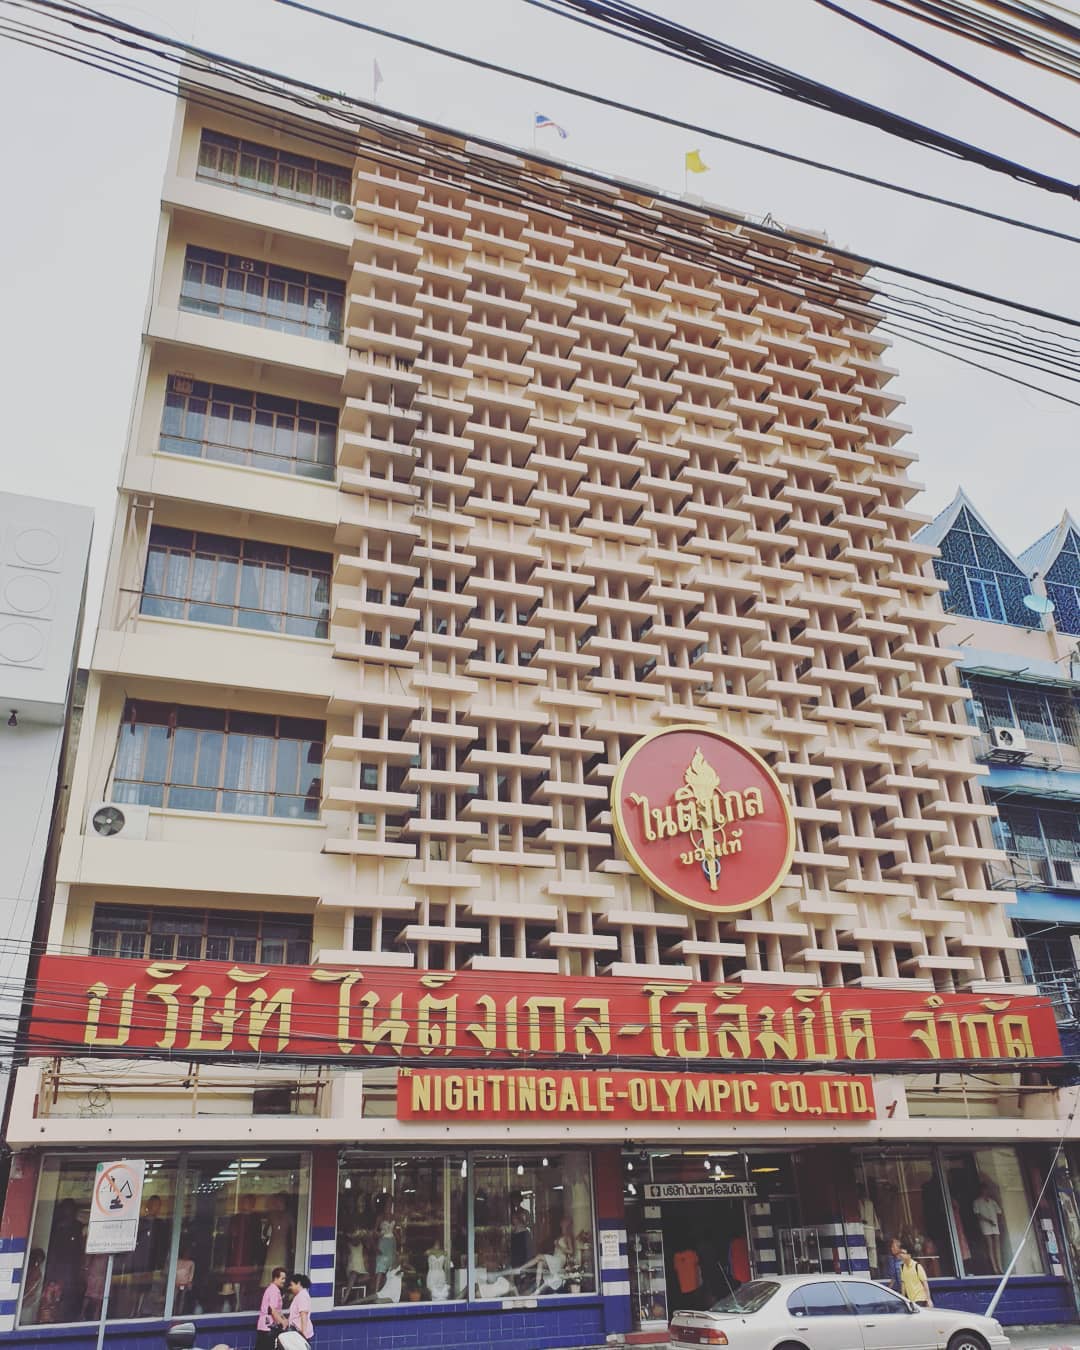 Bangkok Shopping Malls For First Time Visitors - Icon Siam, Siam Paragon, Samyan Mitrtown